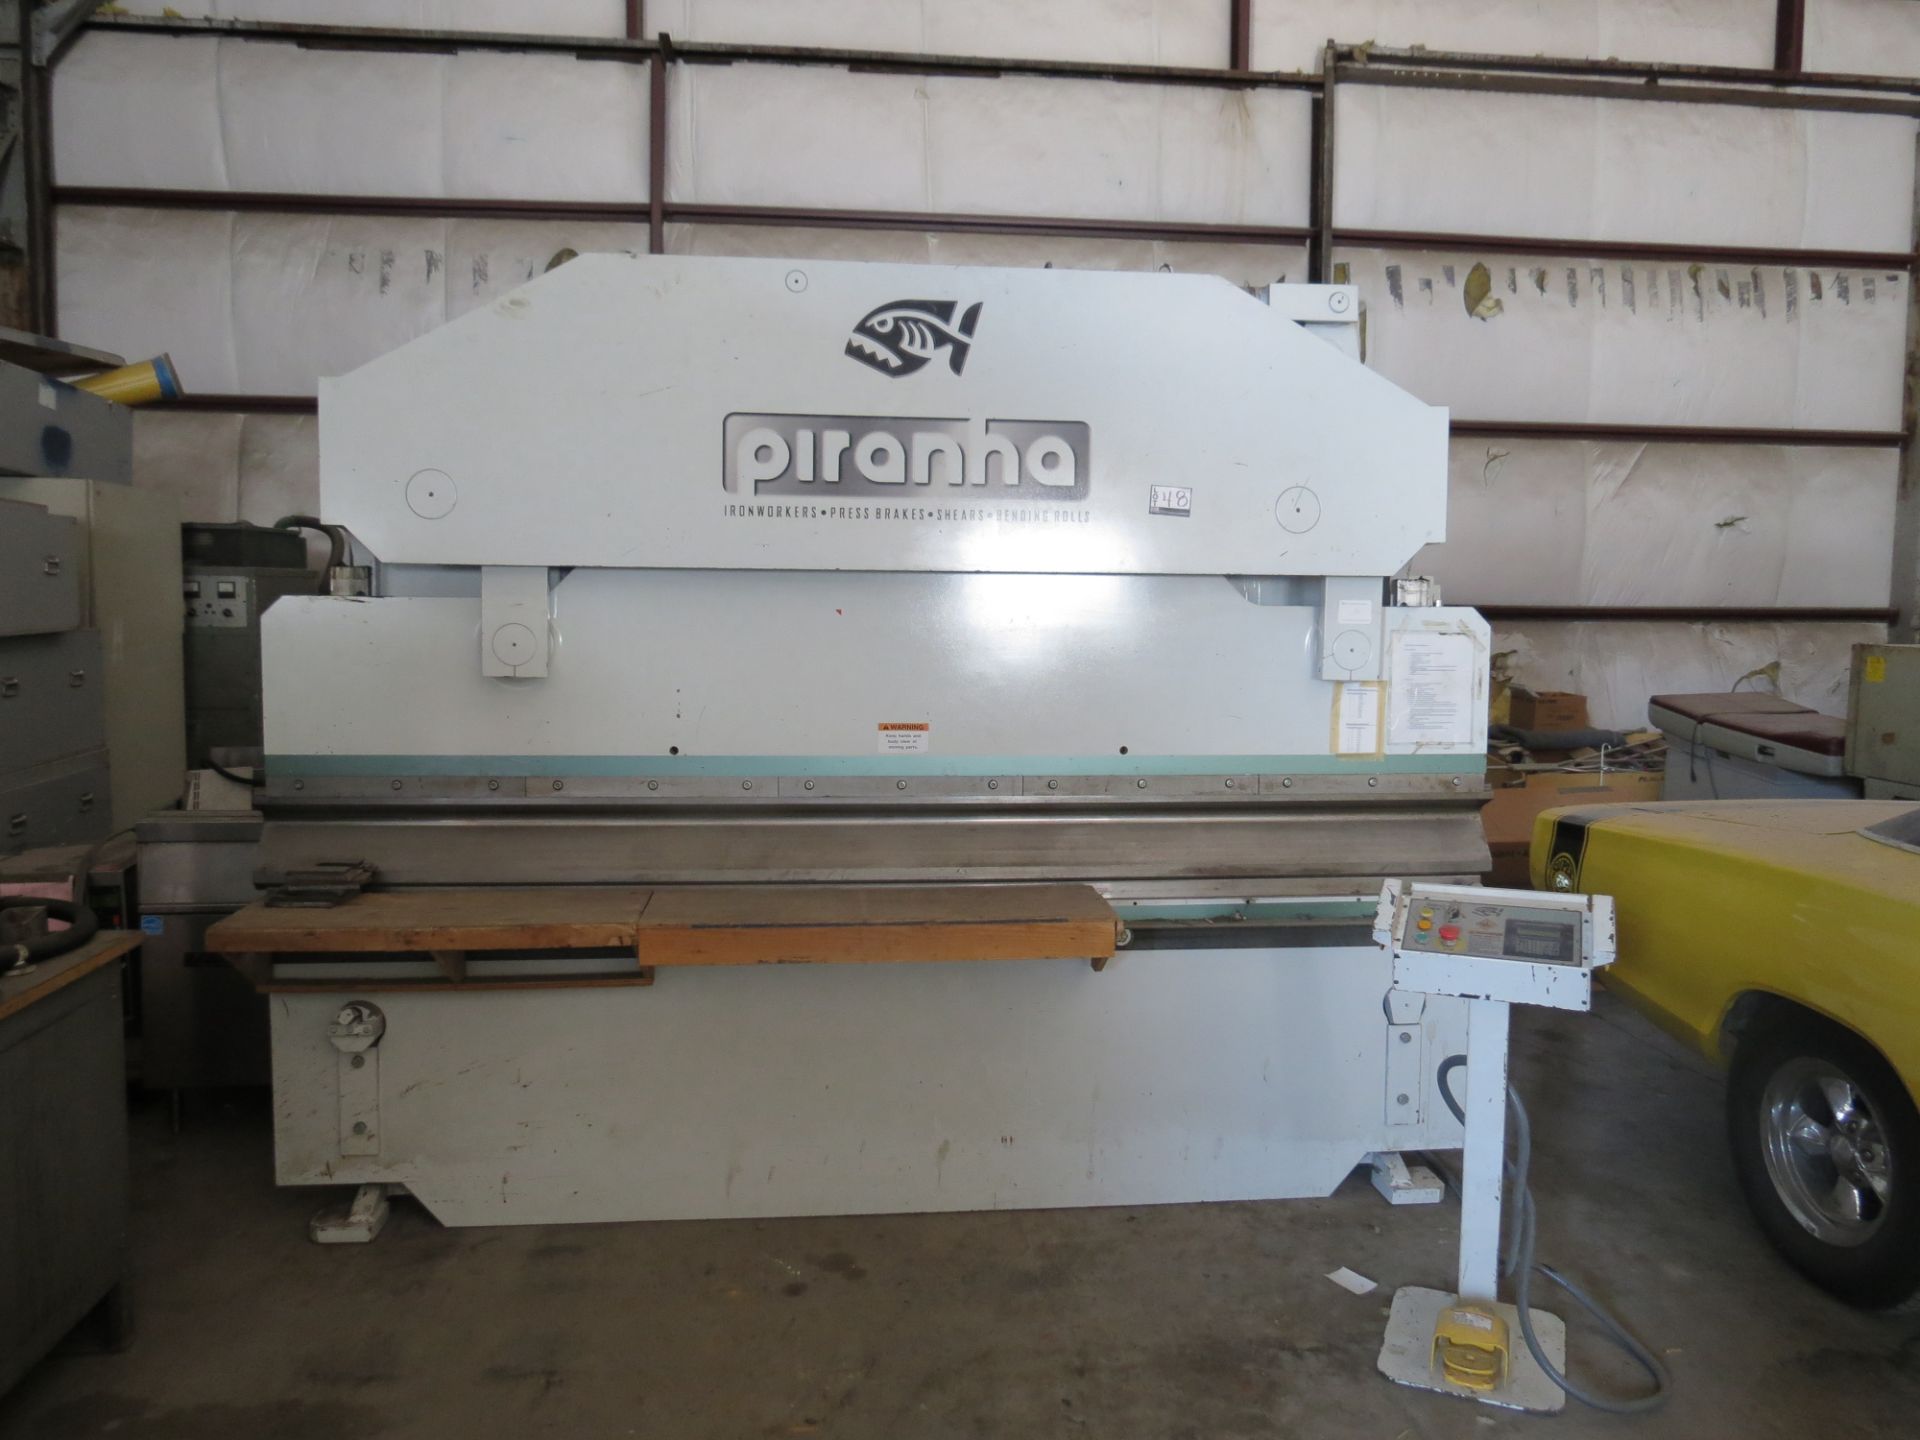 Piranha 1206 12 FT Hydraulic Press Brake, W/ Piranha Genarations-2 Controls, Back Gages, s/n 9510 - Image 2 of 8